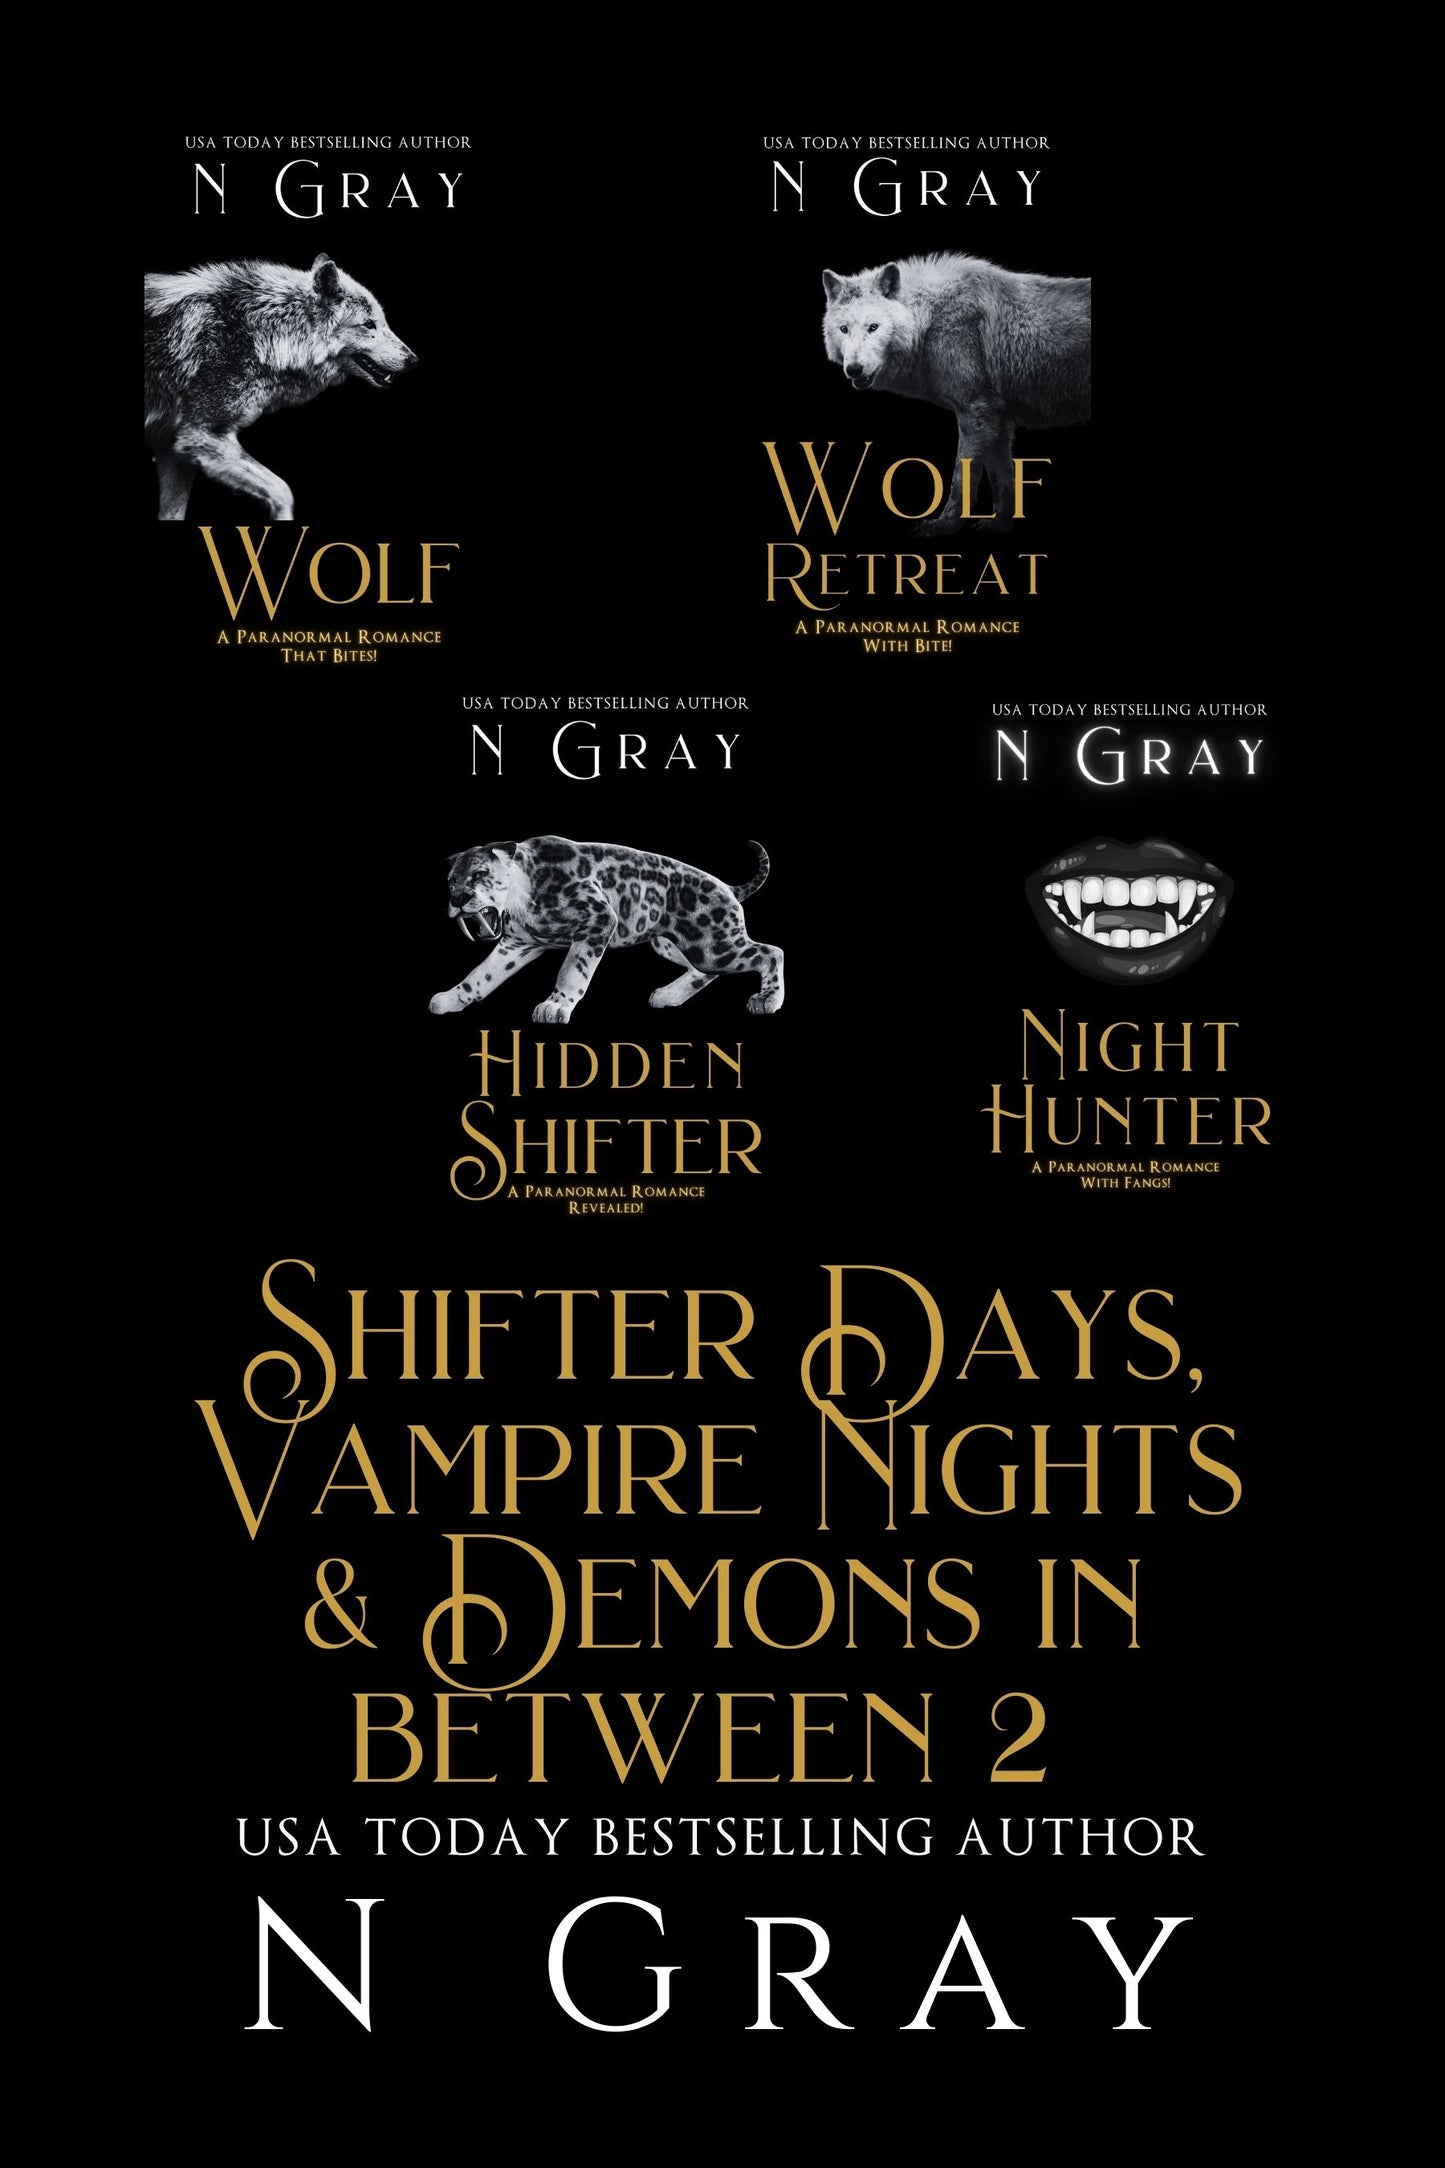 N Gray's PNR Shifter Days, Vampire Nights & Demons in between 2